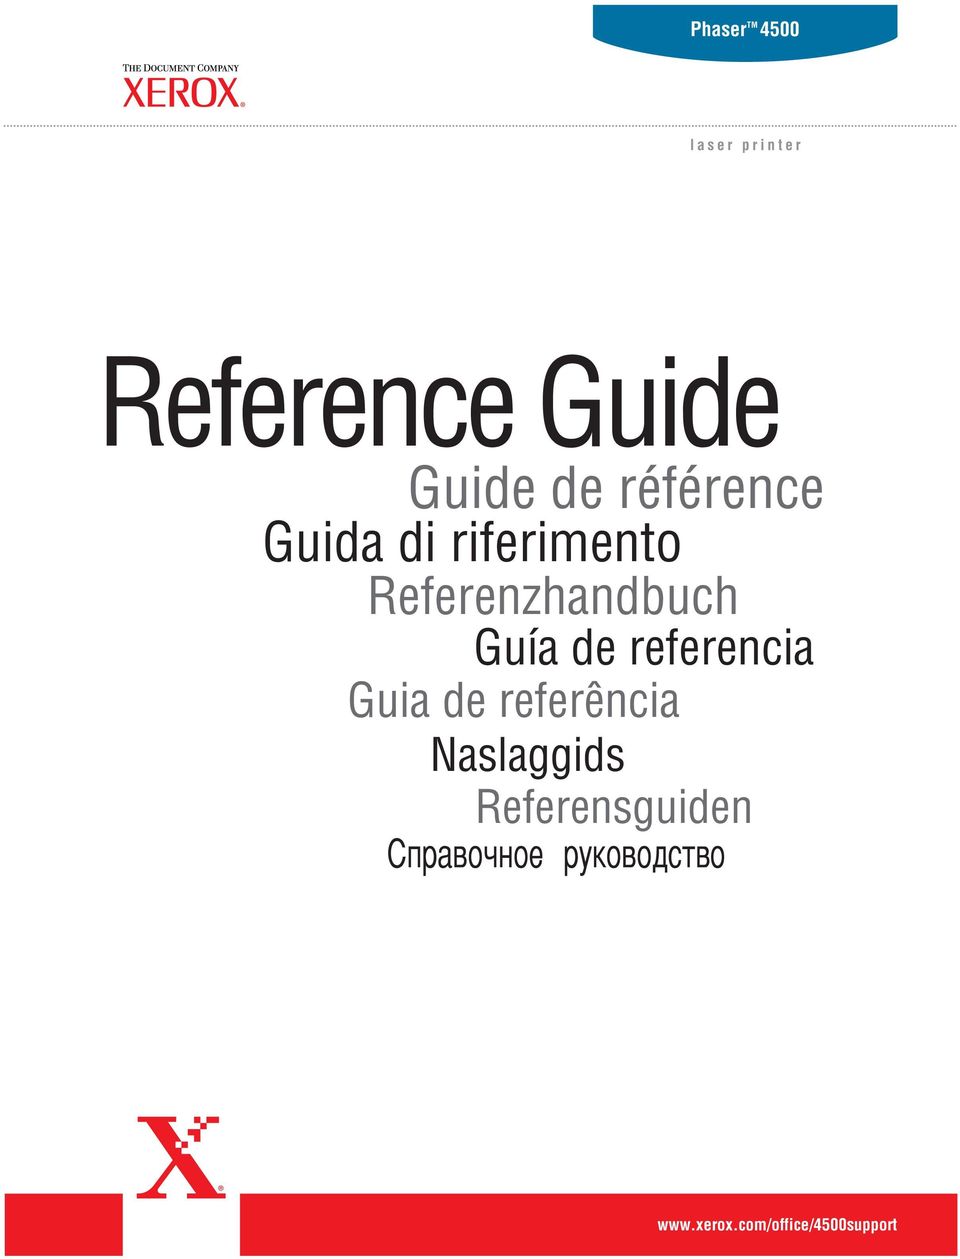 Referenzhandbuch Guía de referencia Guia de